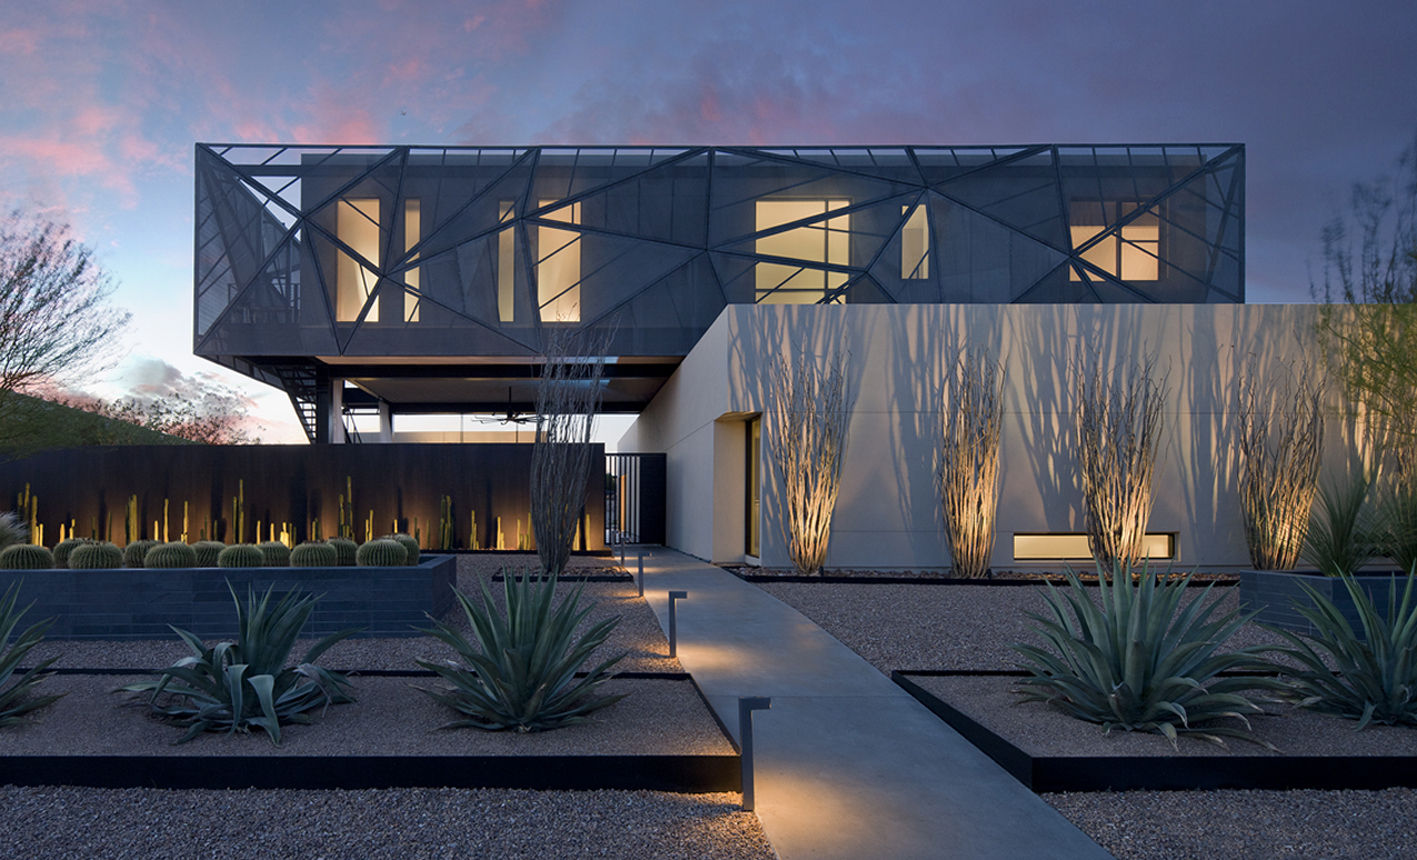 The Best Exterior House Design Ideas - Architecture Beast